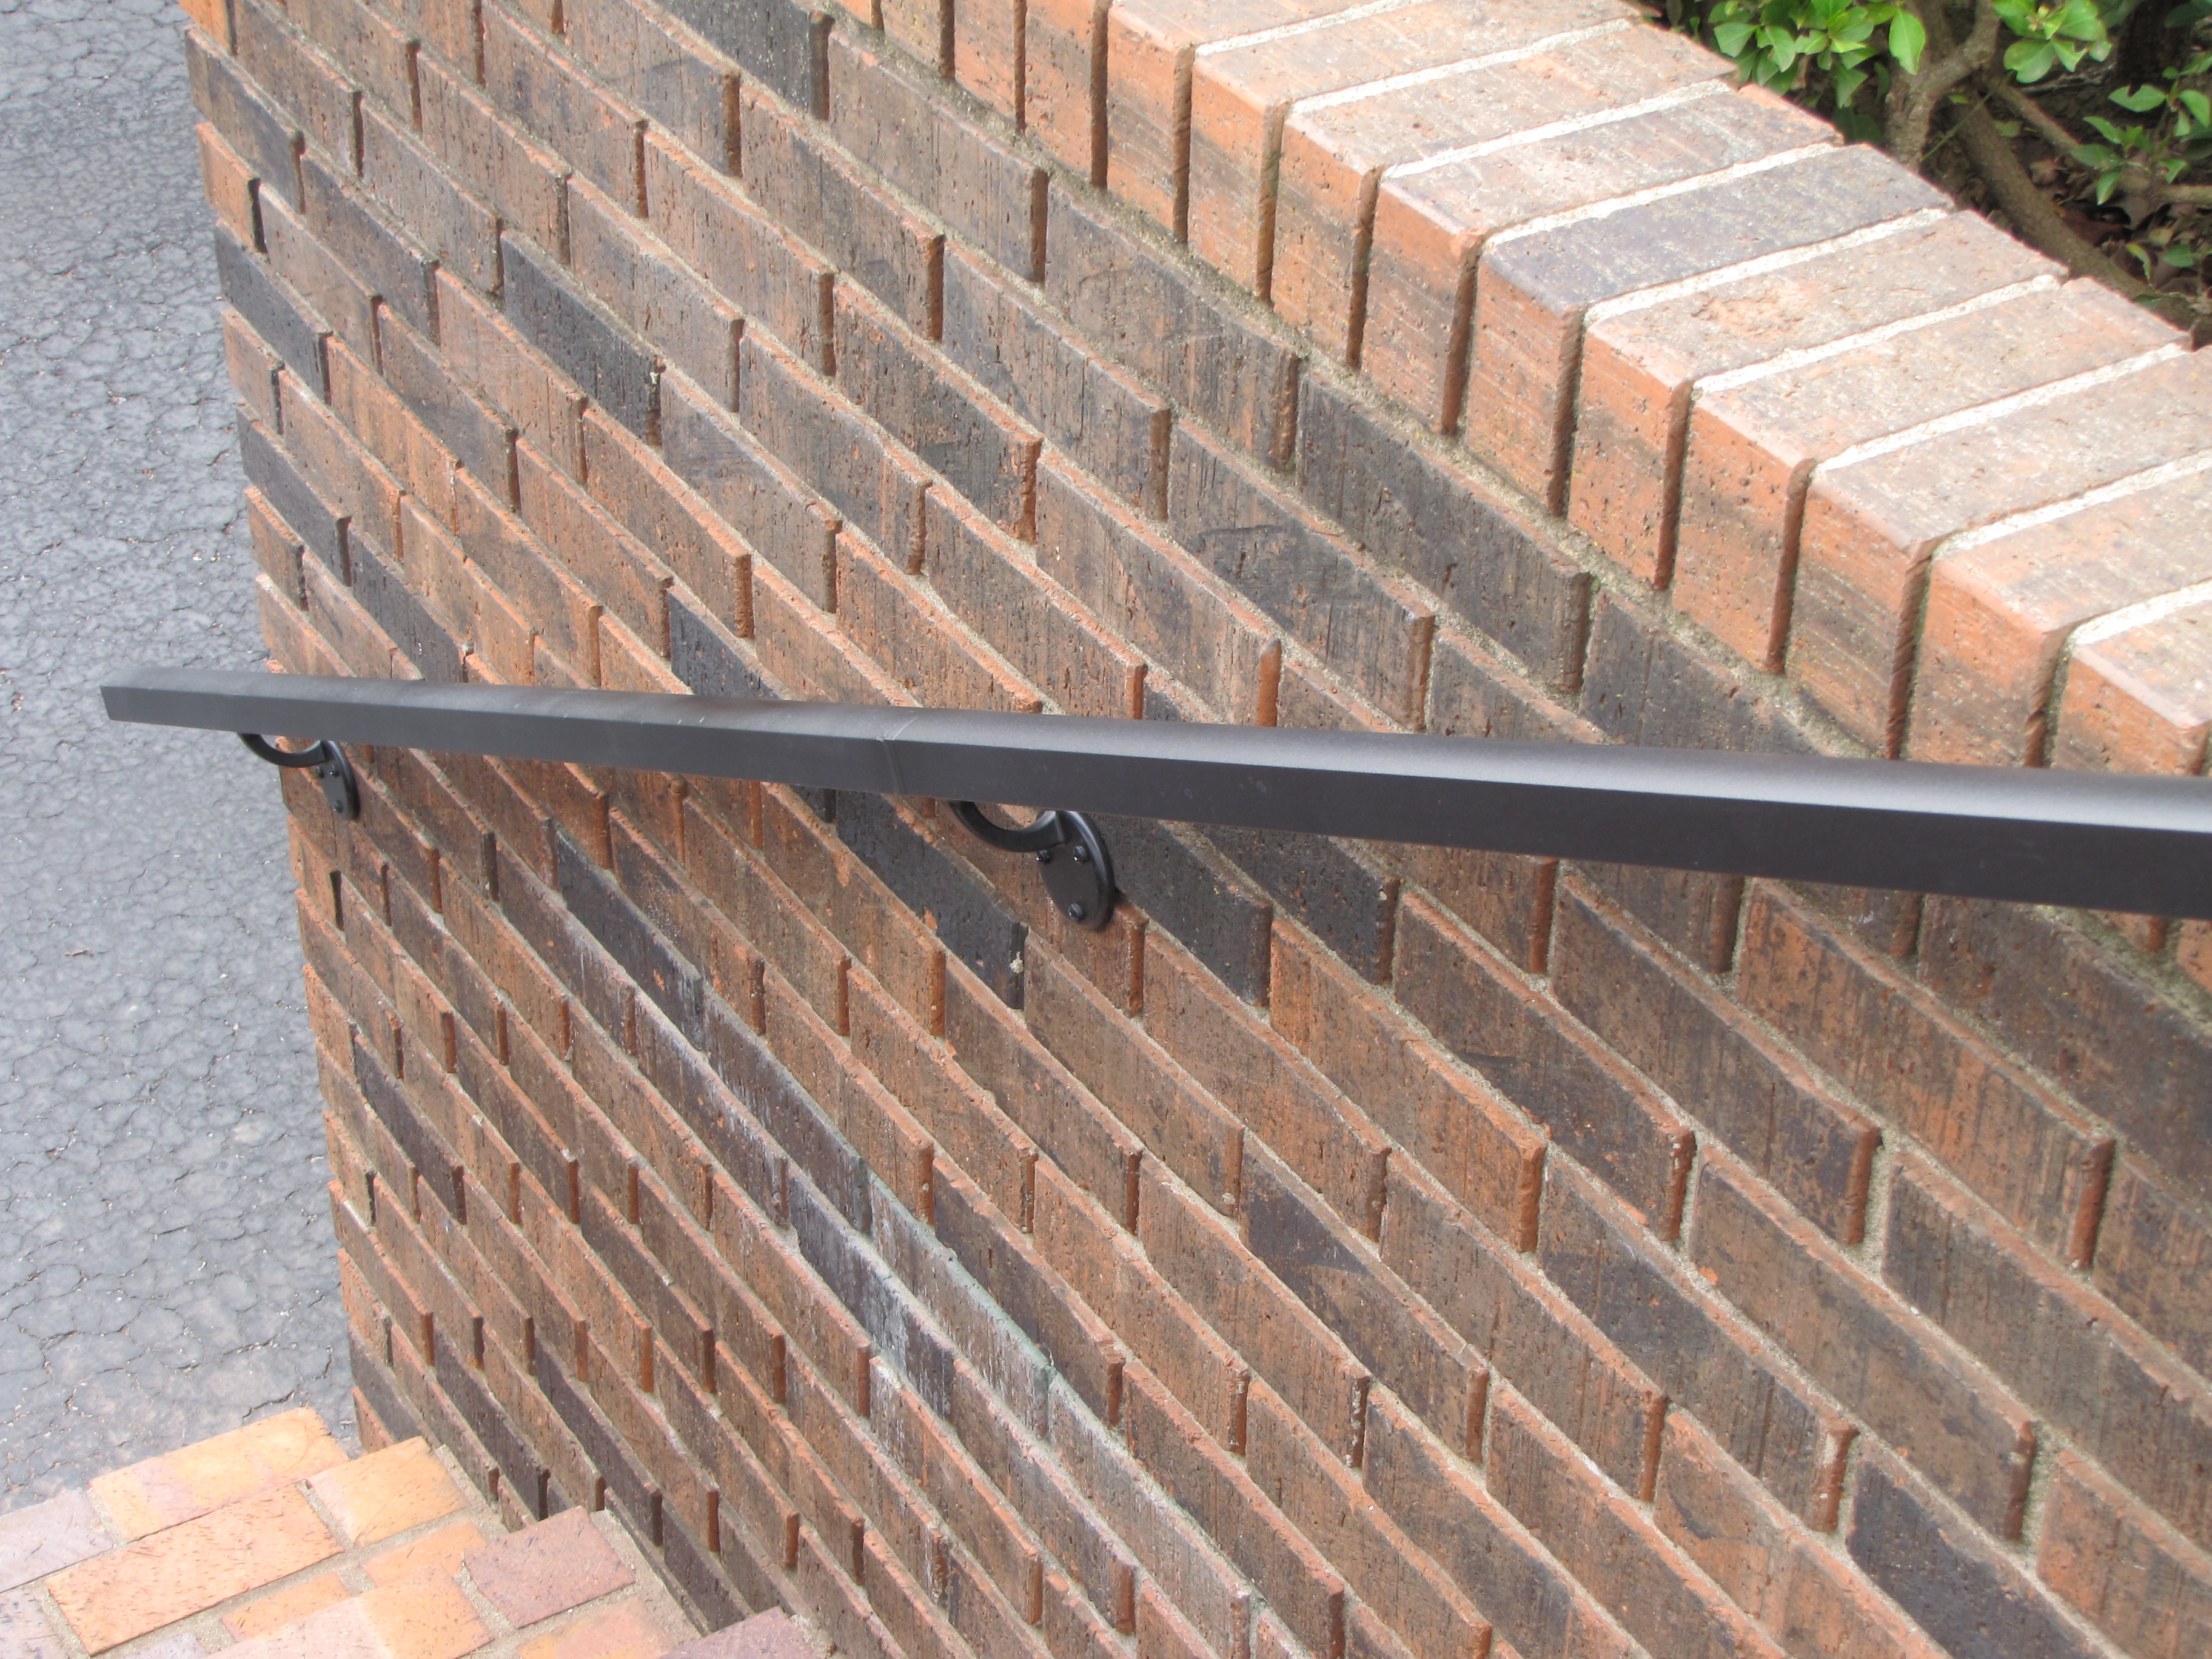 Attaching Handrail to Brick Walls